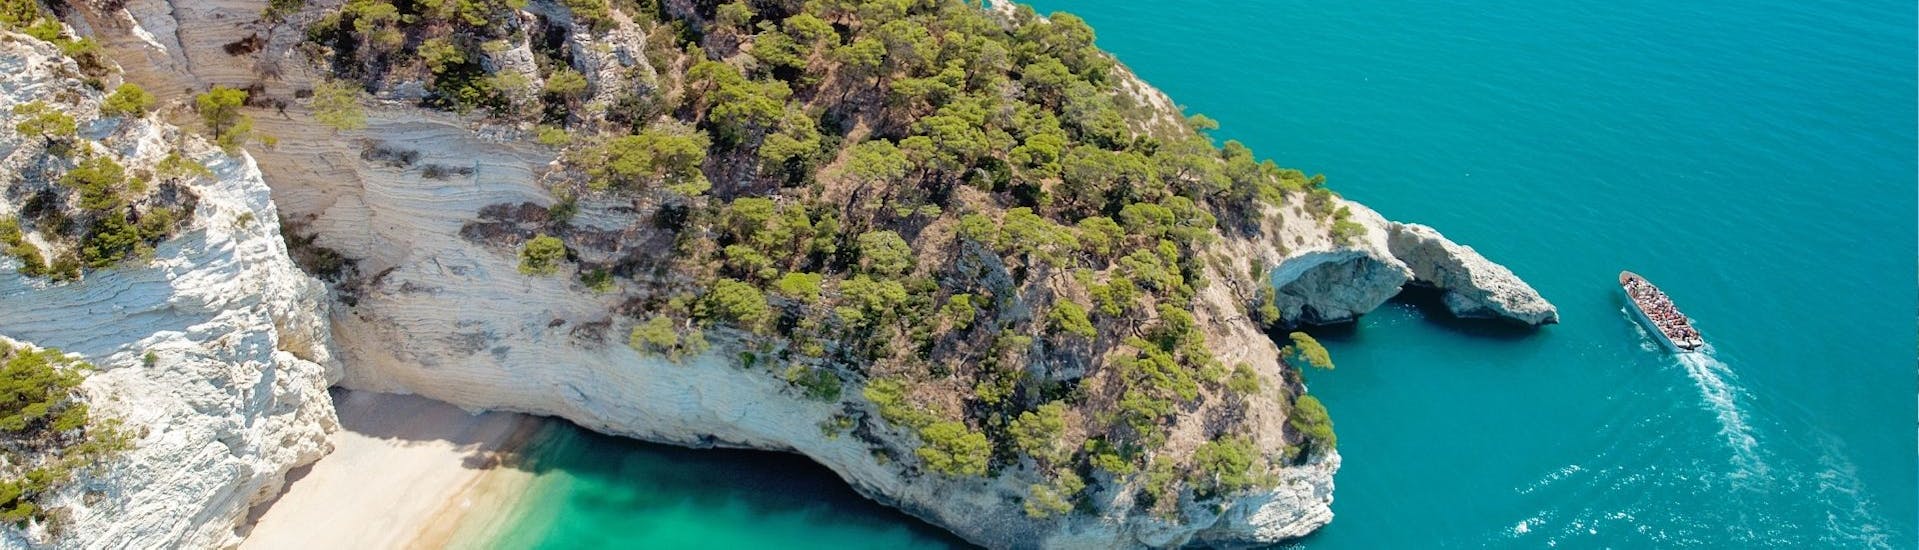 La côte du Gargano est l'une des principales attractions pendant la balade privée en bateau semi-rigide vers les grottes marines de Vieste.